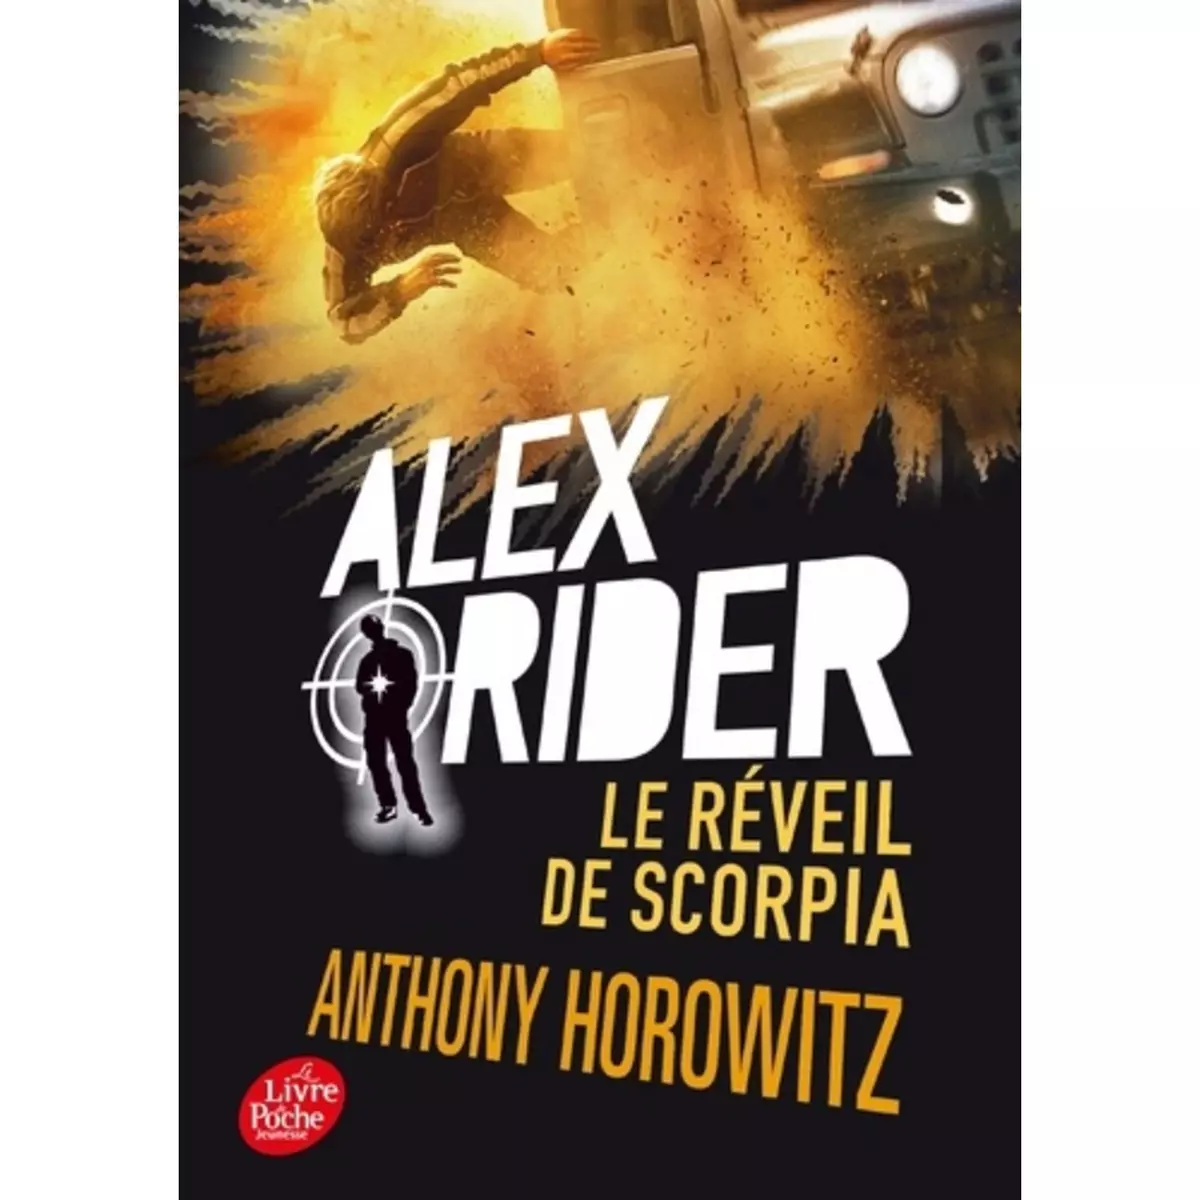  ALEX RIDER TOME 9 : LE REVEIL DE SCORPIA, Horowitz Anthony